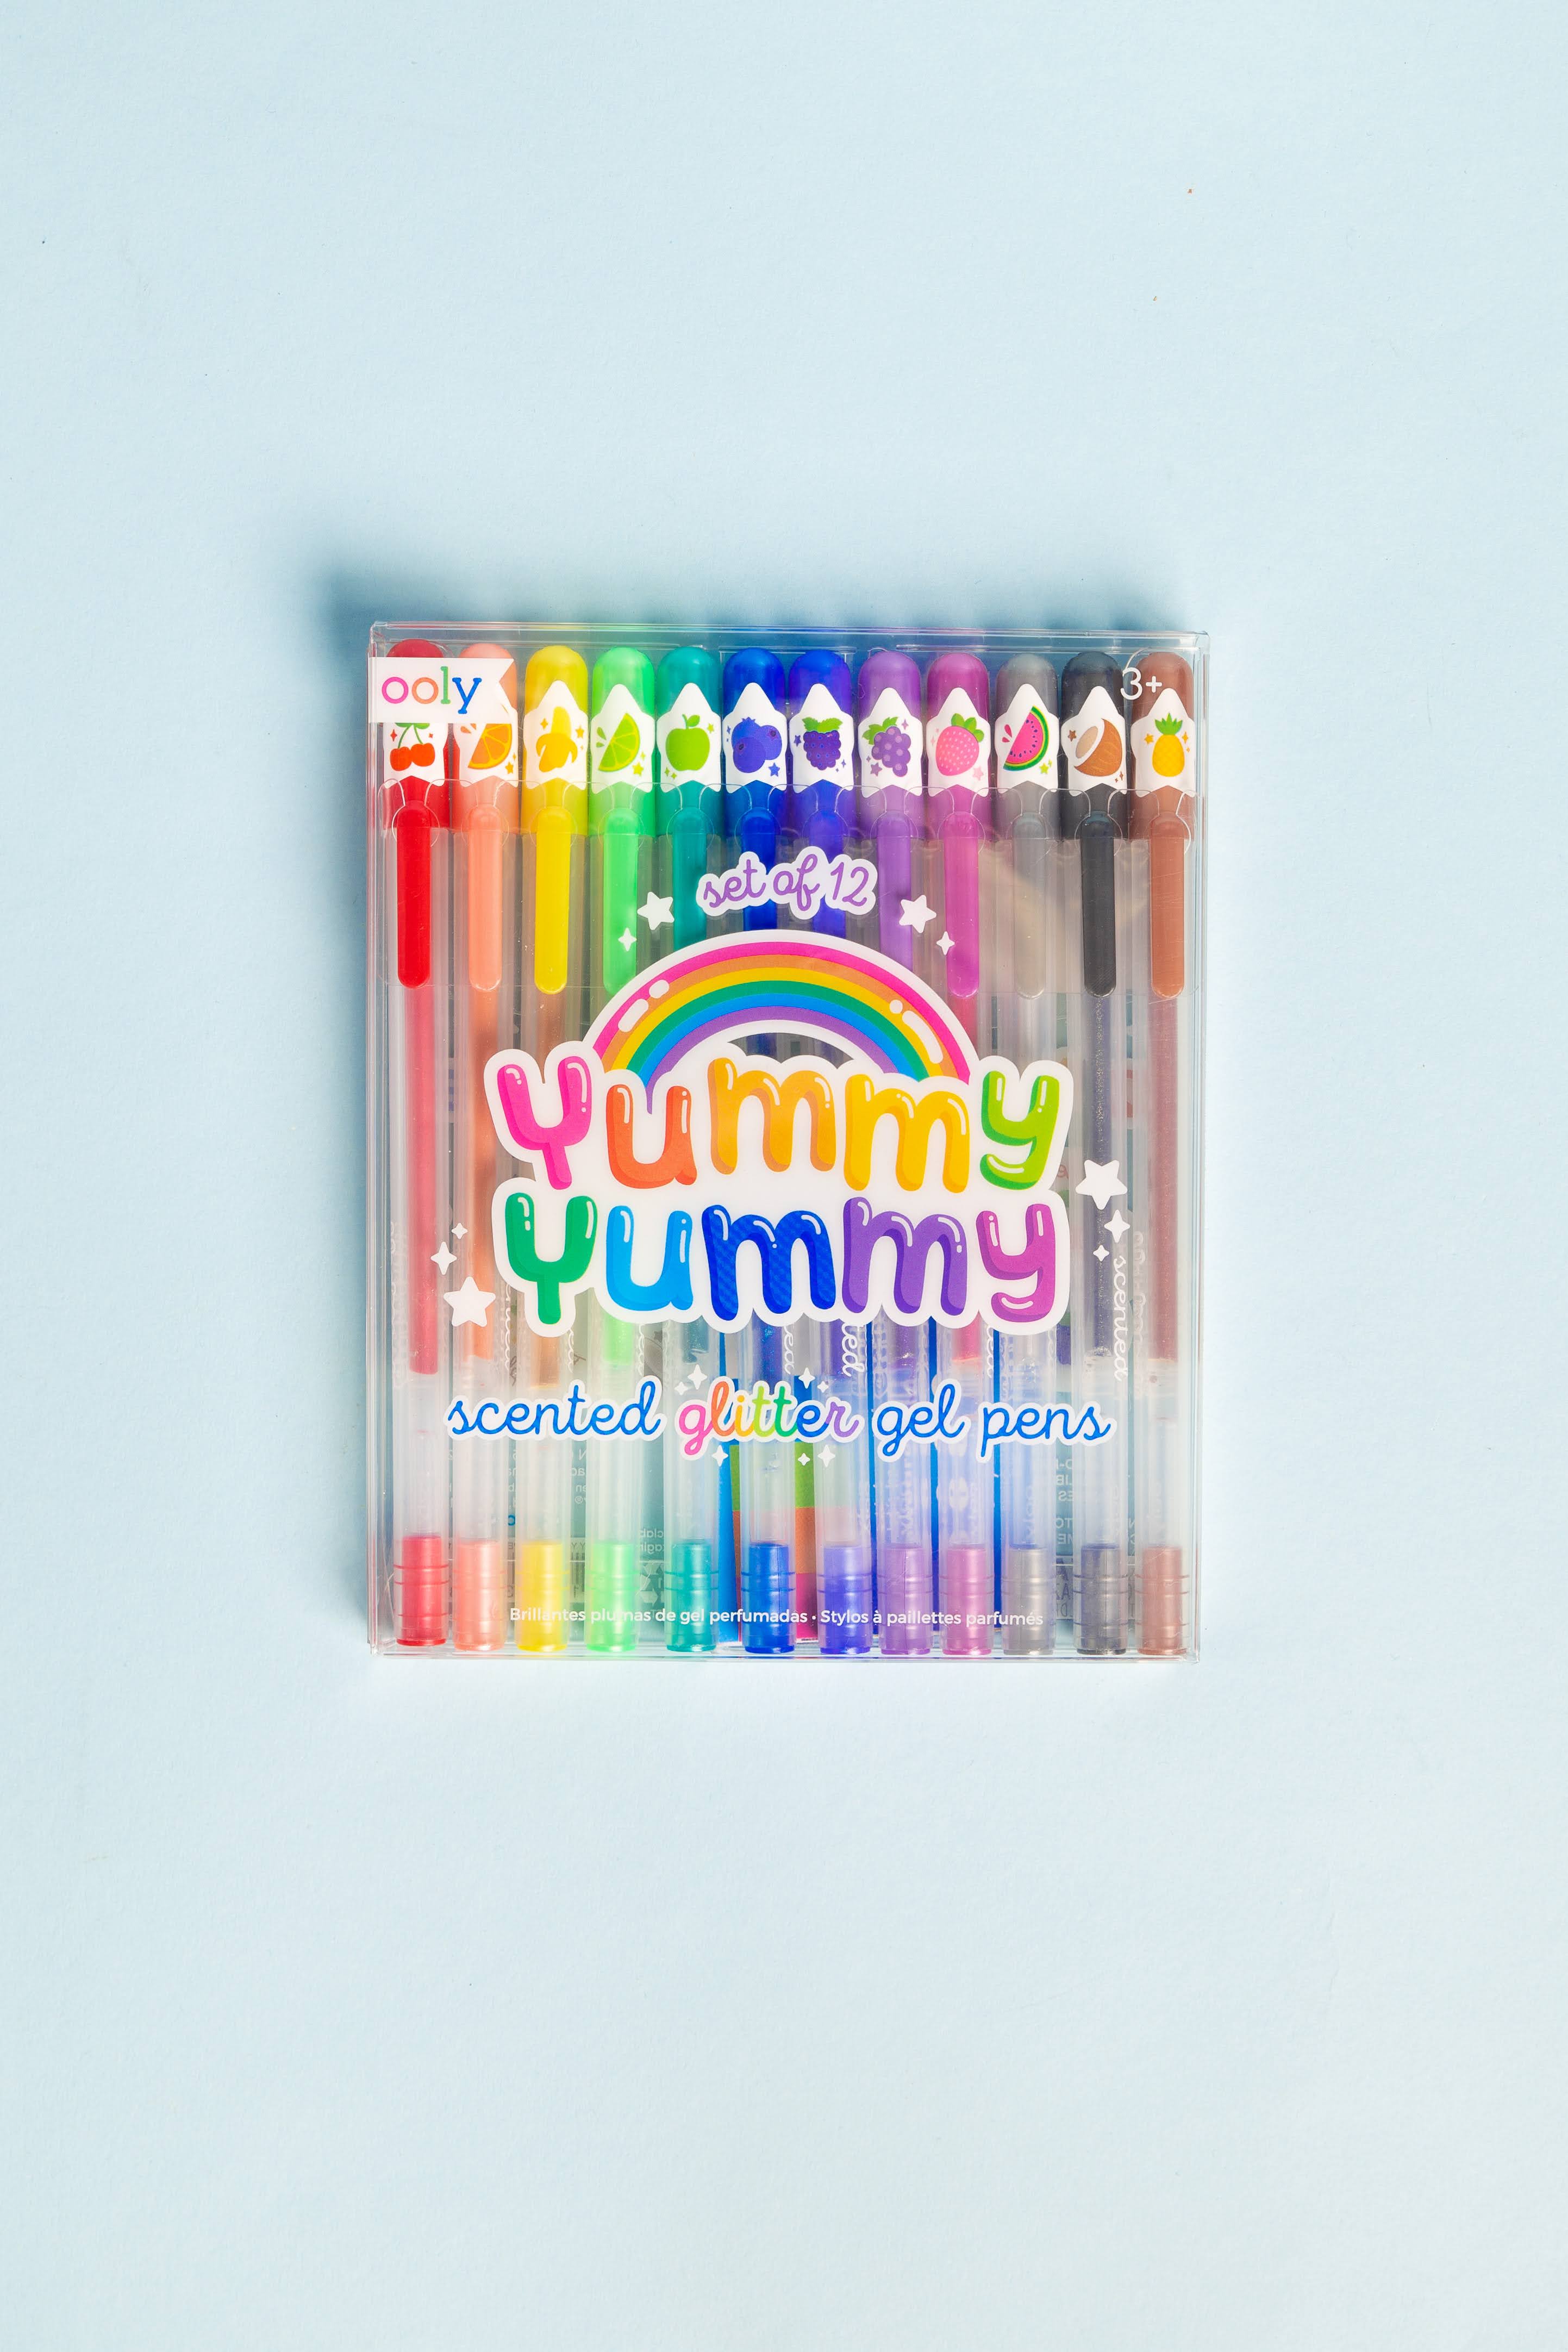 yummy yummy scented glitter gel pens 2.0 – MONSTER KIDS